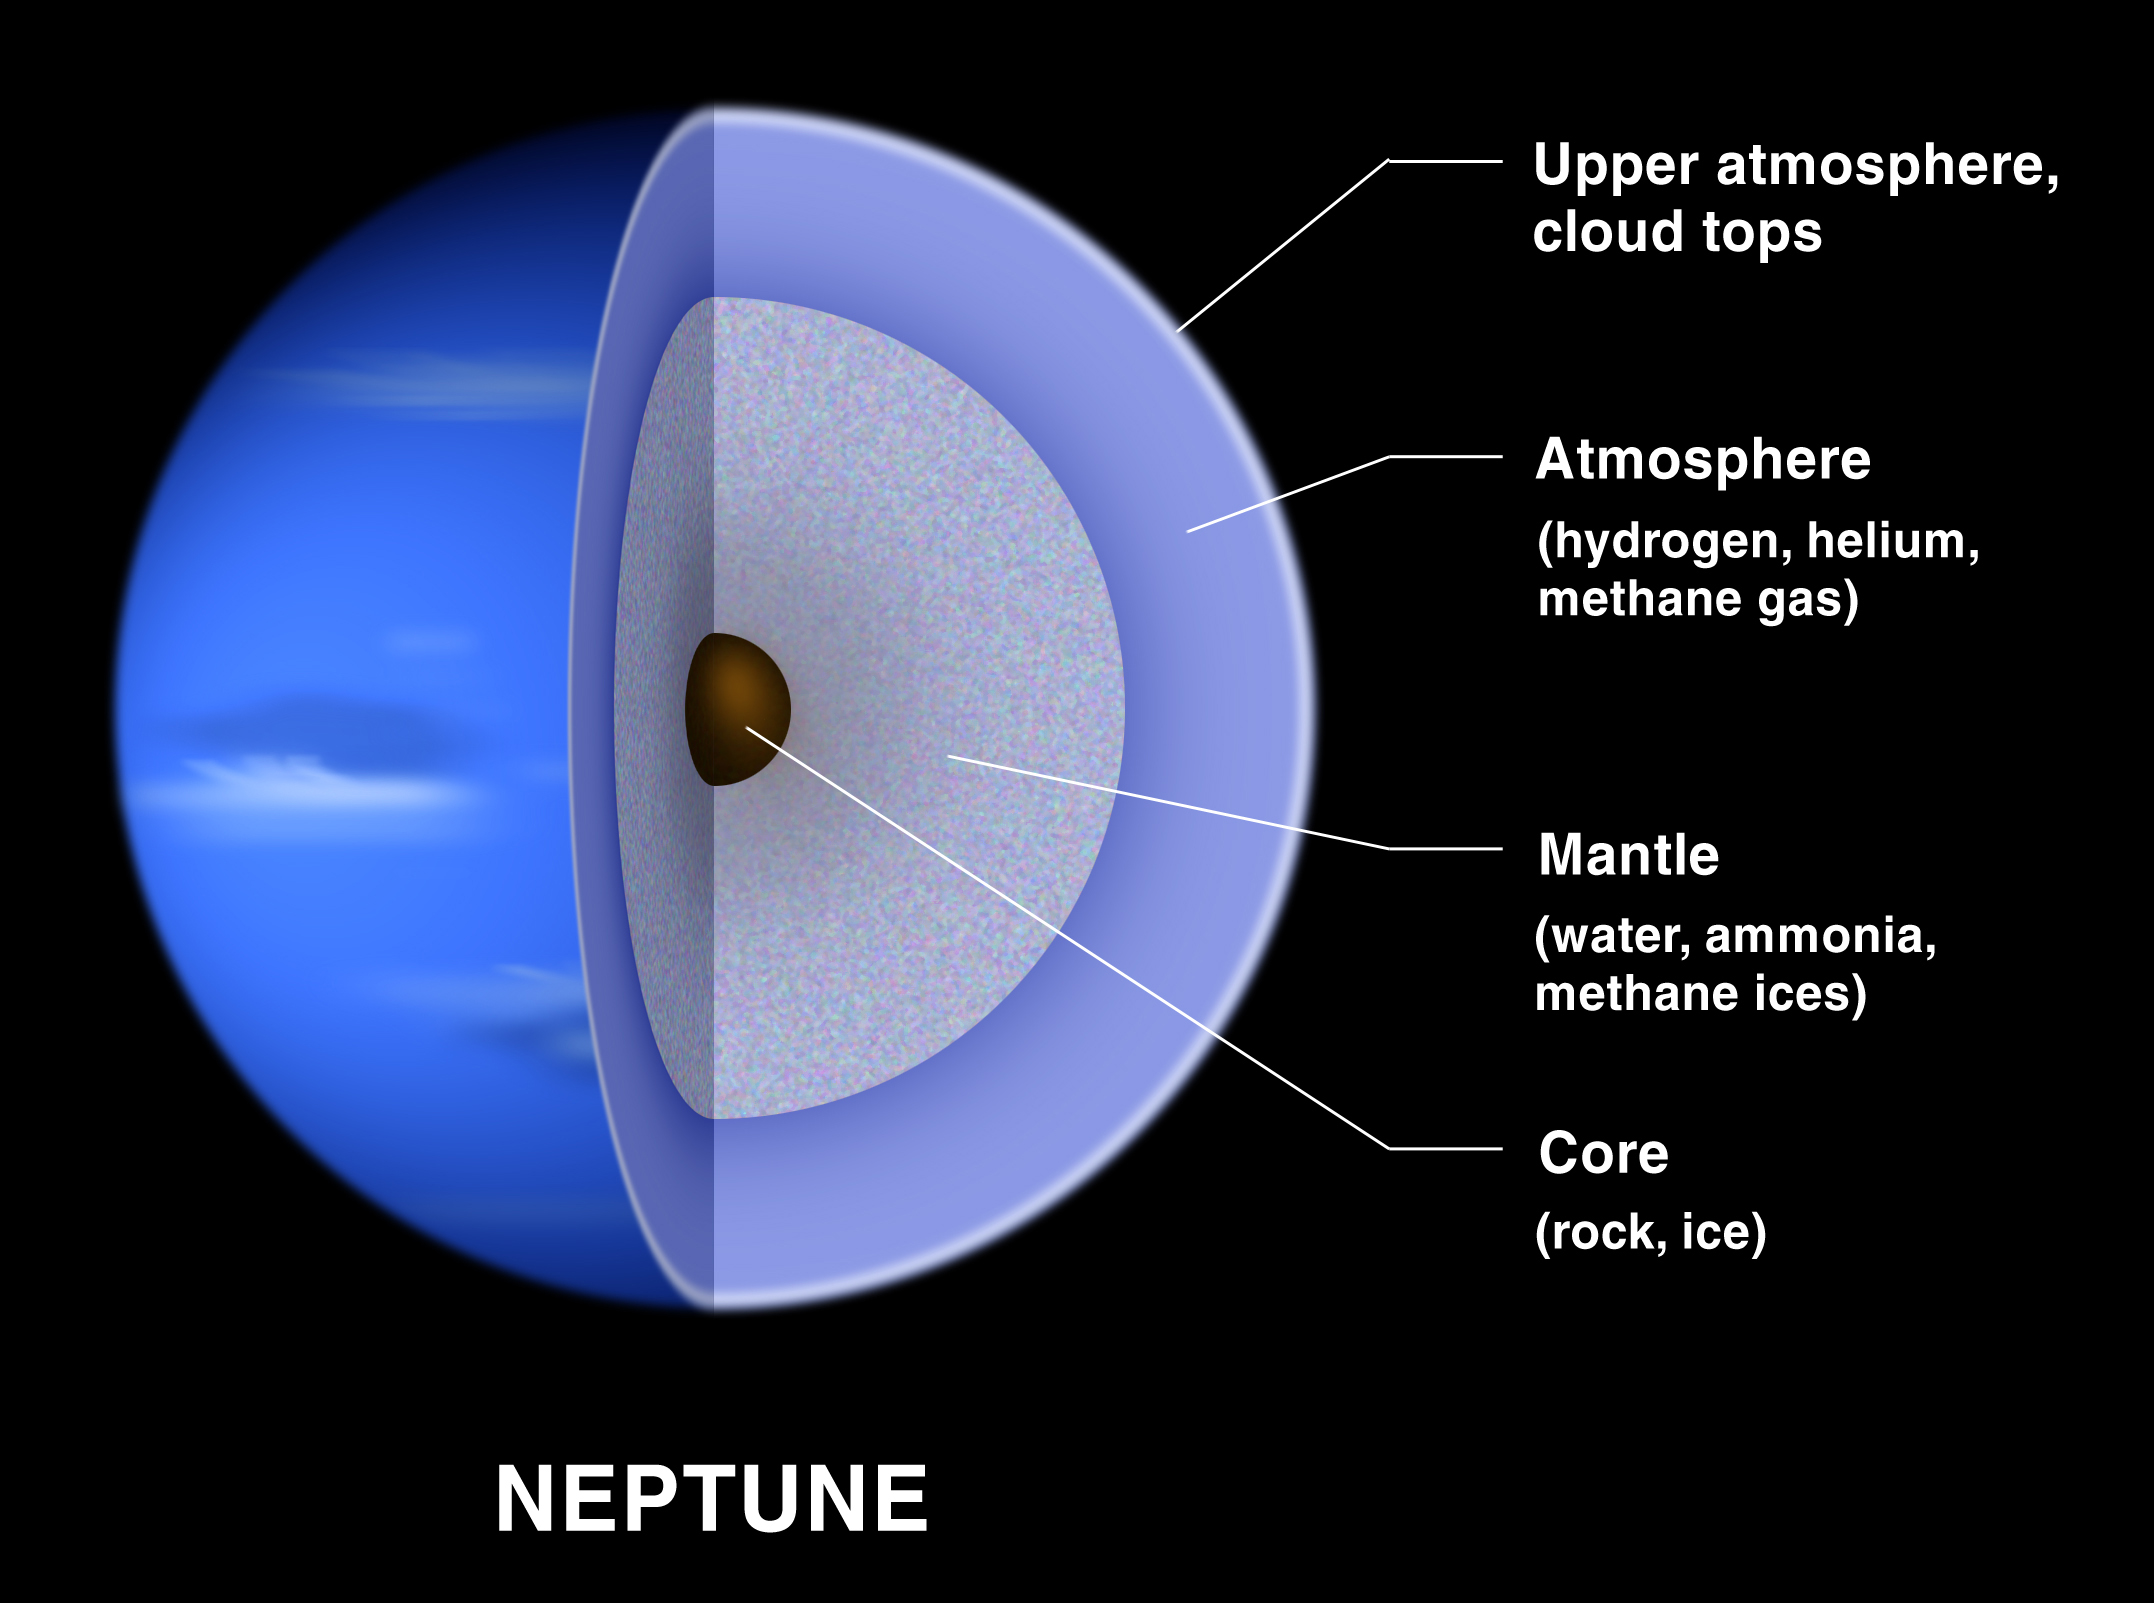 Interior layers of Neptune